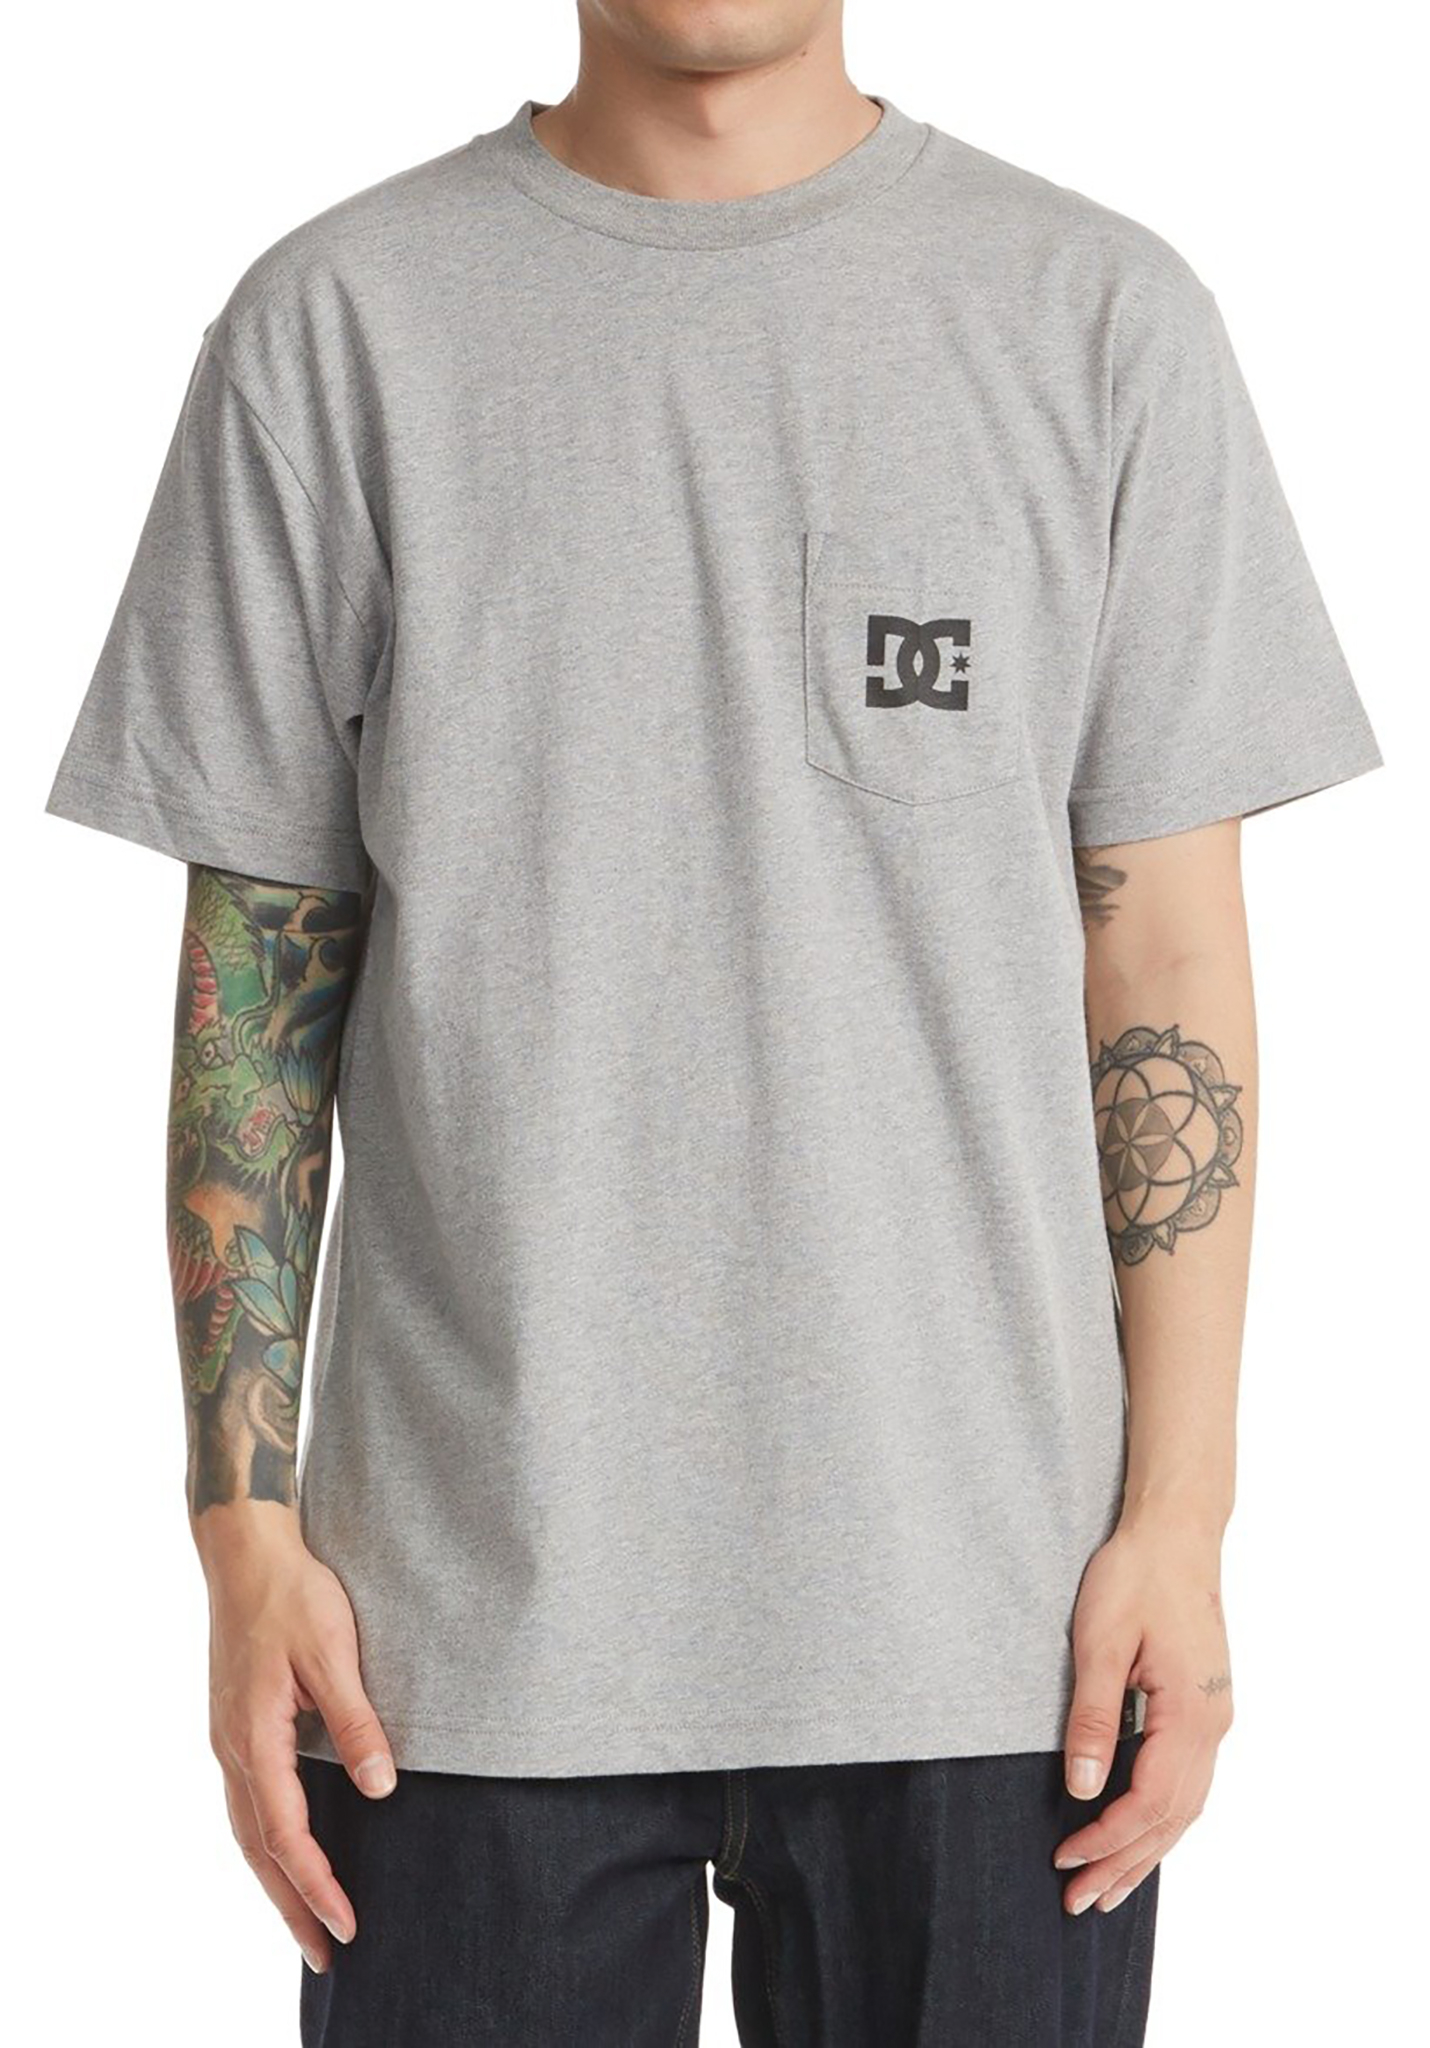 DC DC Star T-Shirt heather grey S